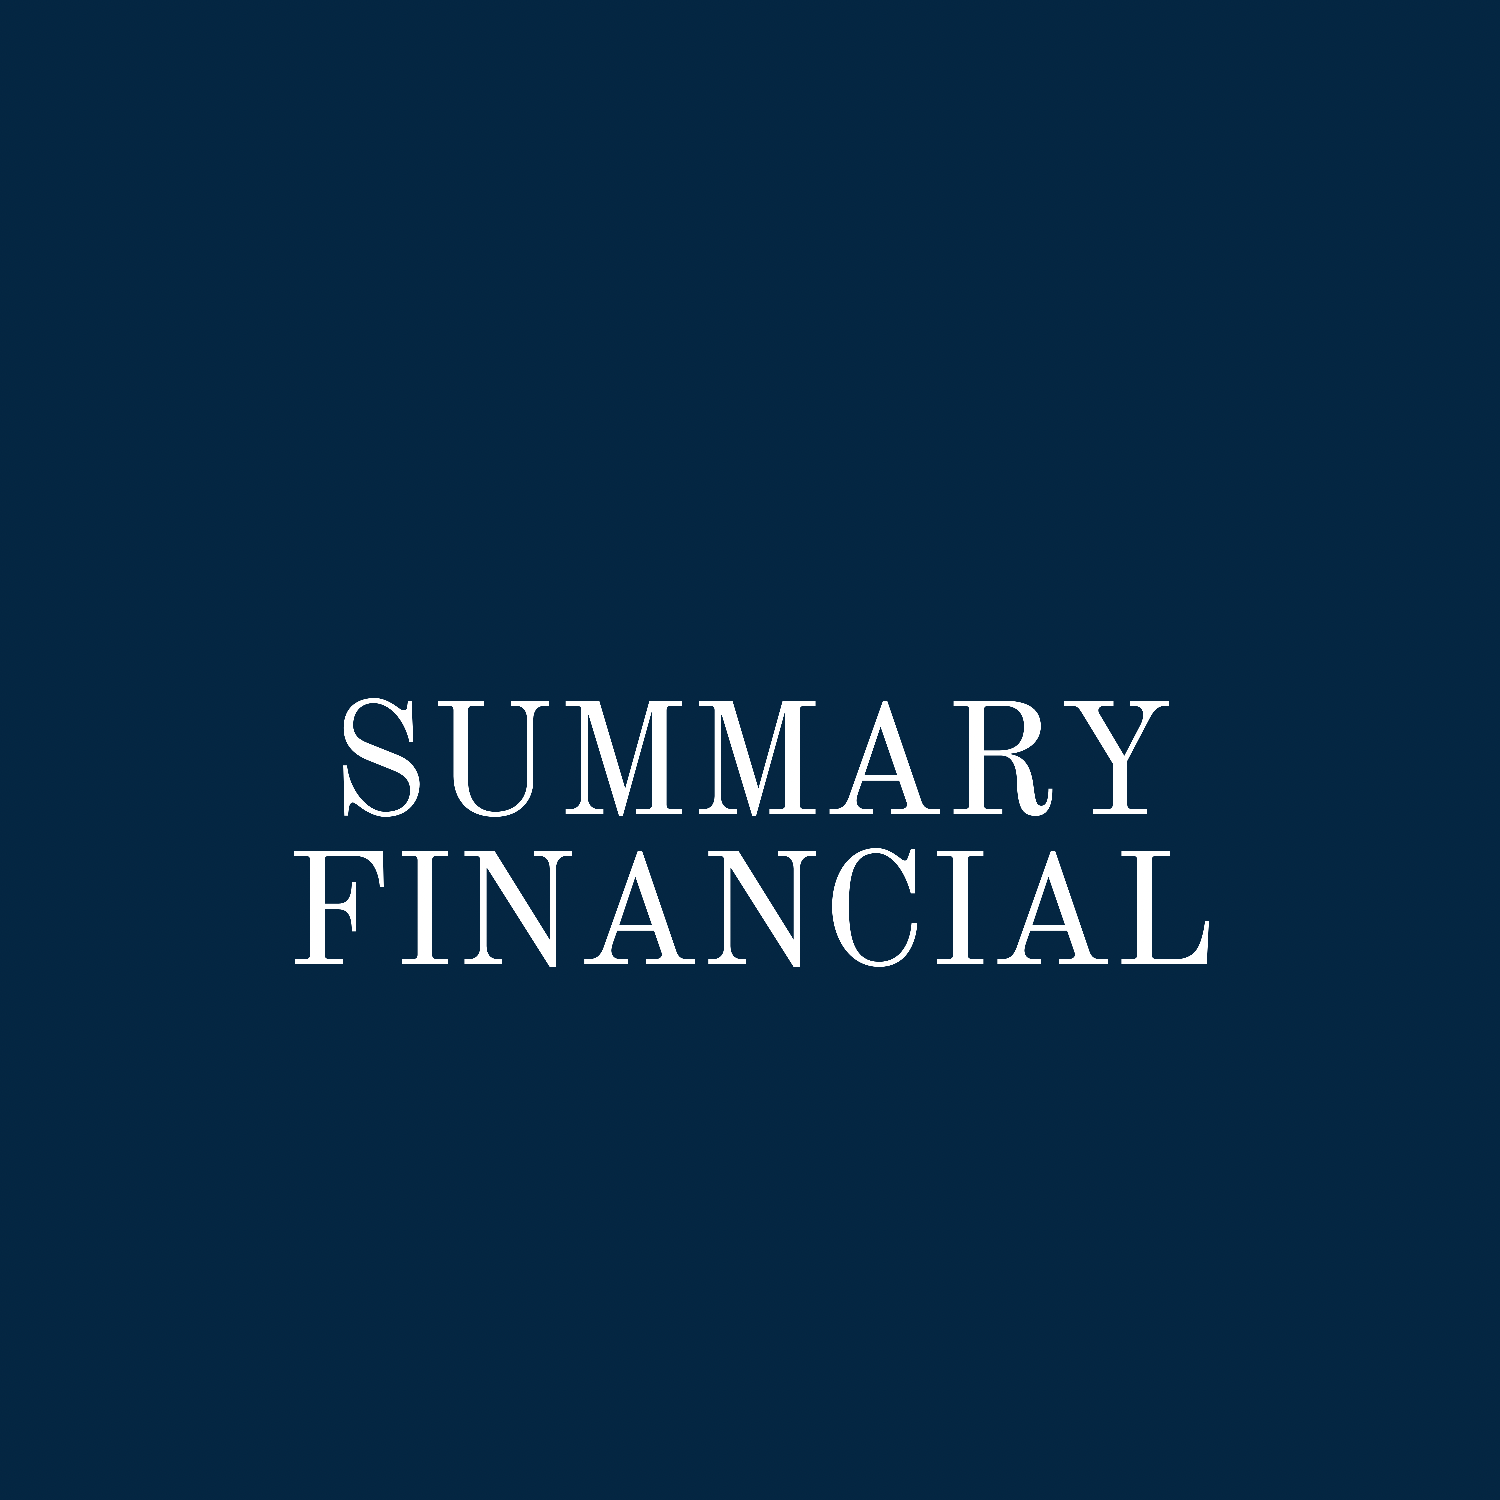 Summary Financial